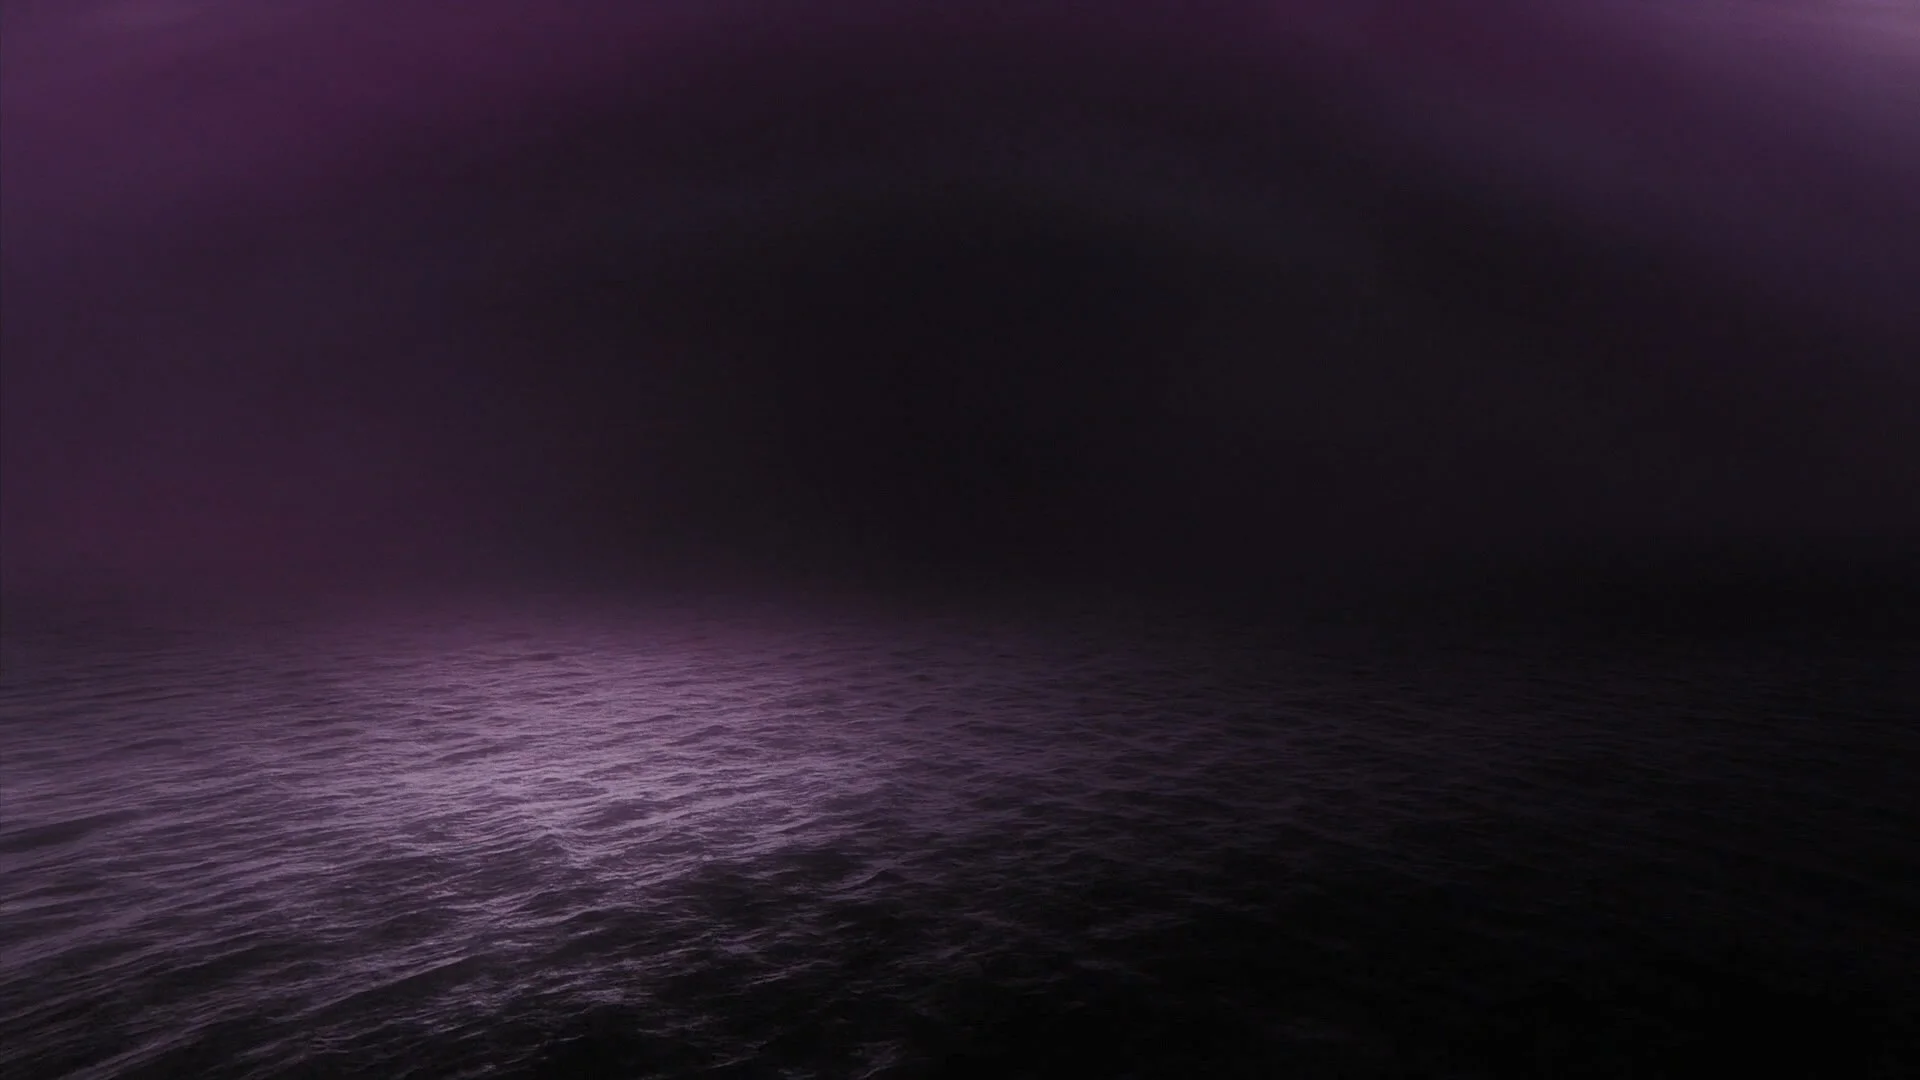 The purple sea